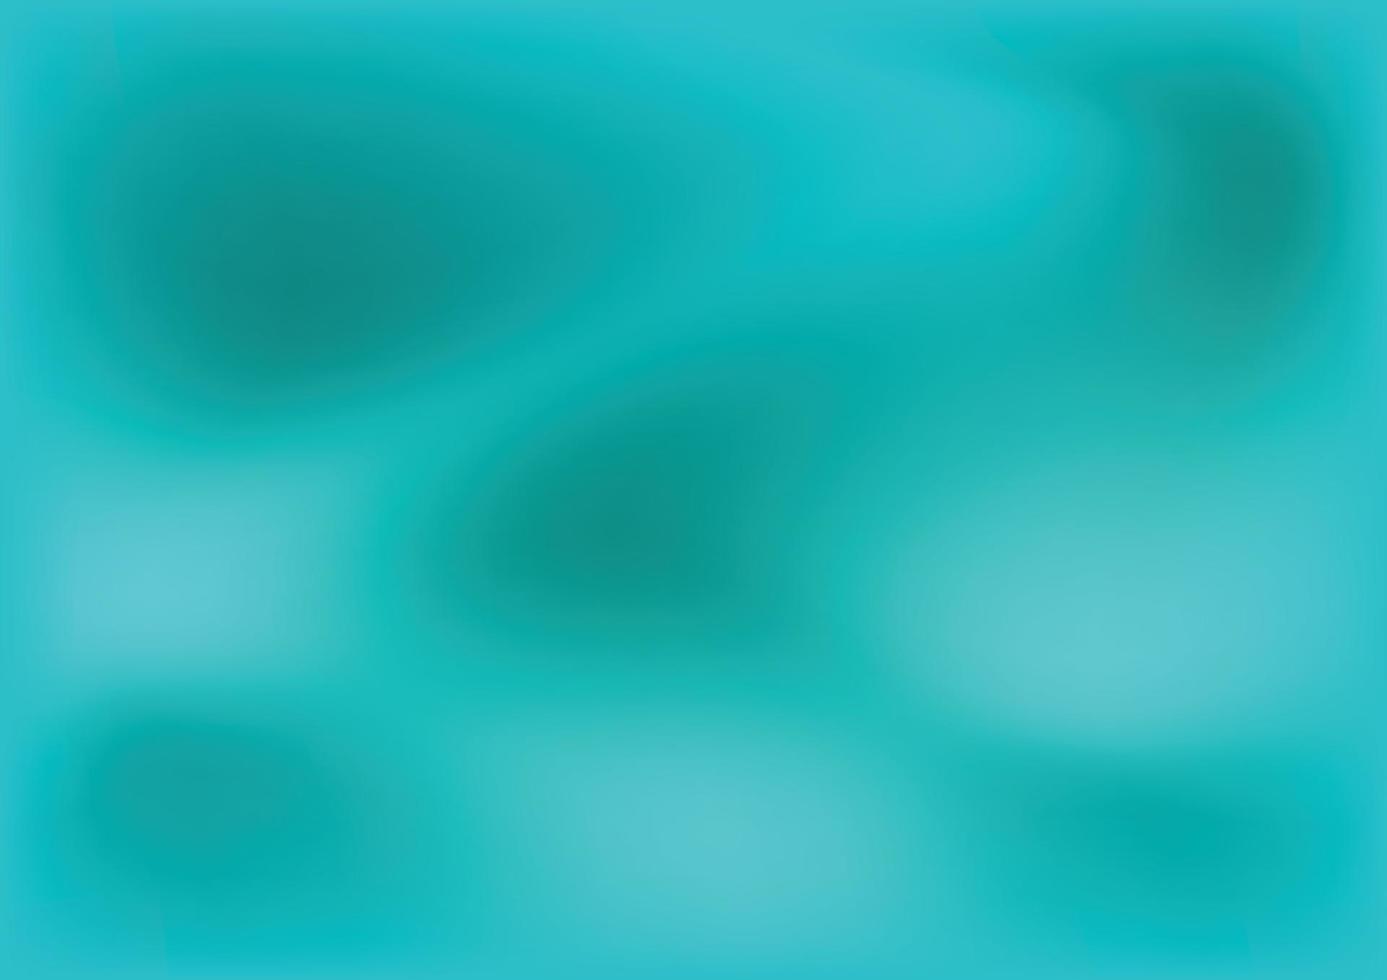 resumen verde azulado antecedentes. borroso turquesa agua fondo. vector ilustración para tu gráfico diseño.